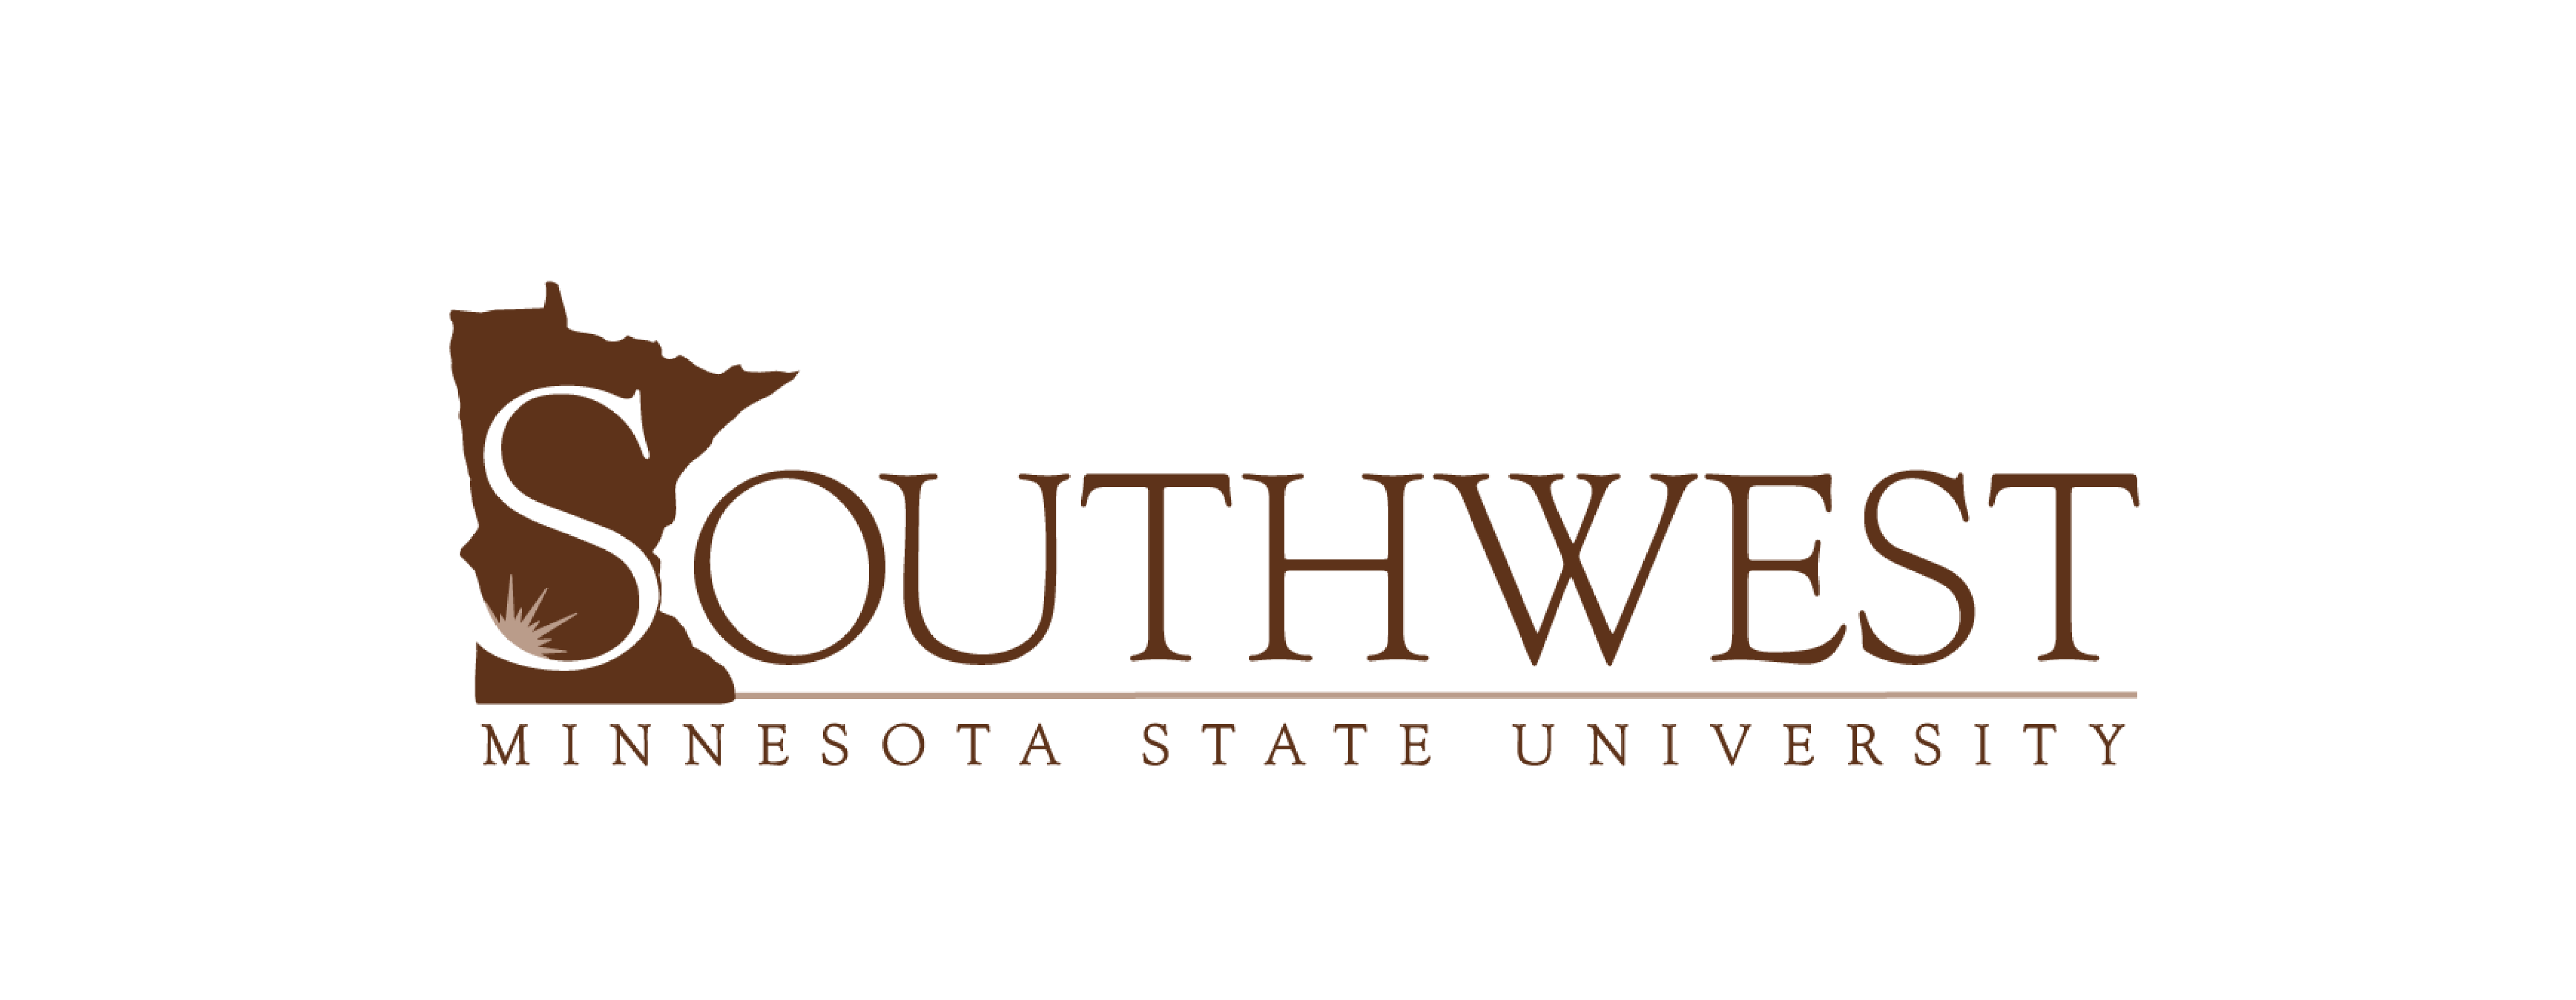 Southwest Minnesota State University, logo.